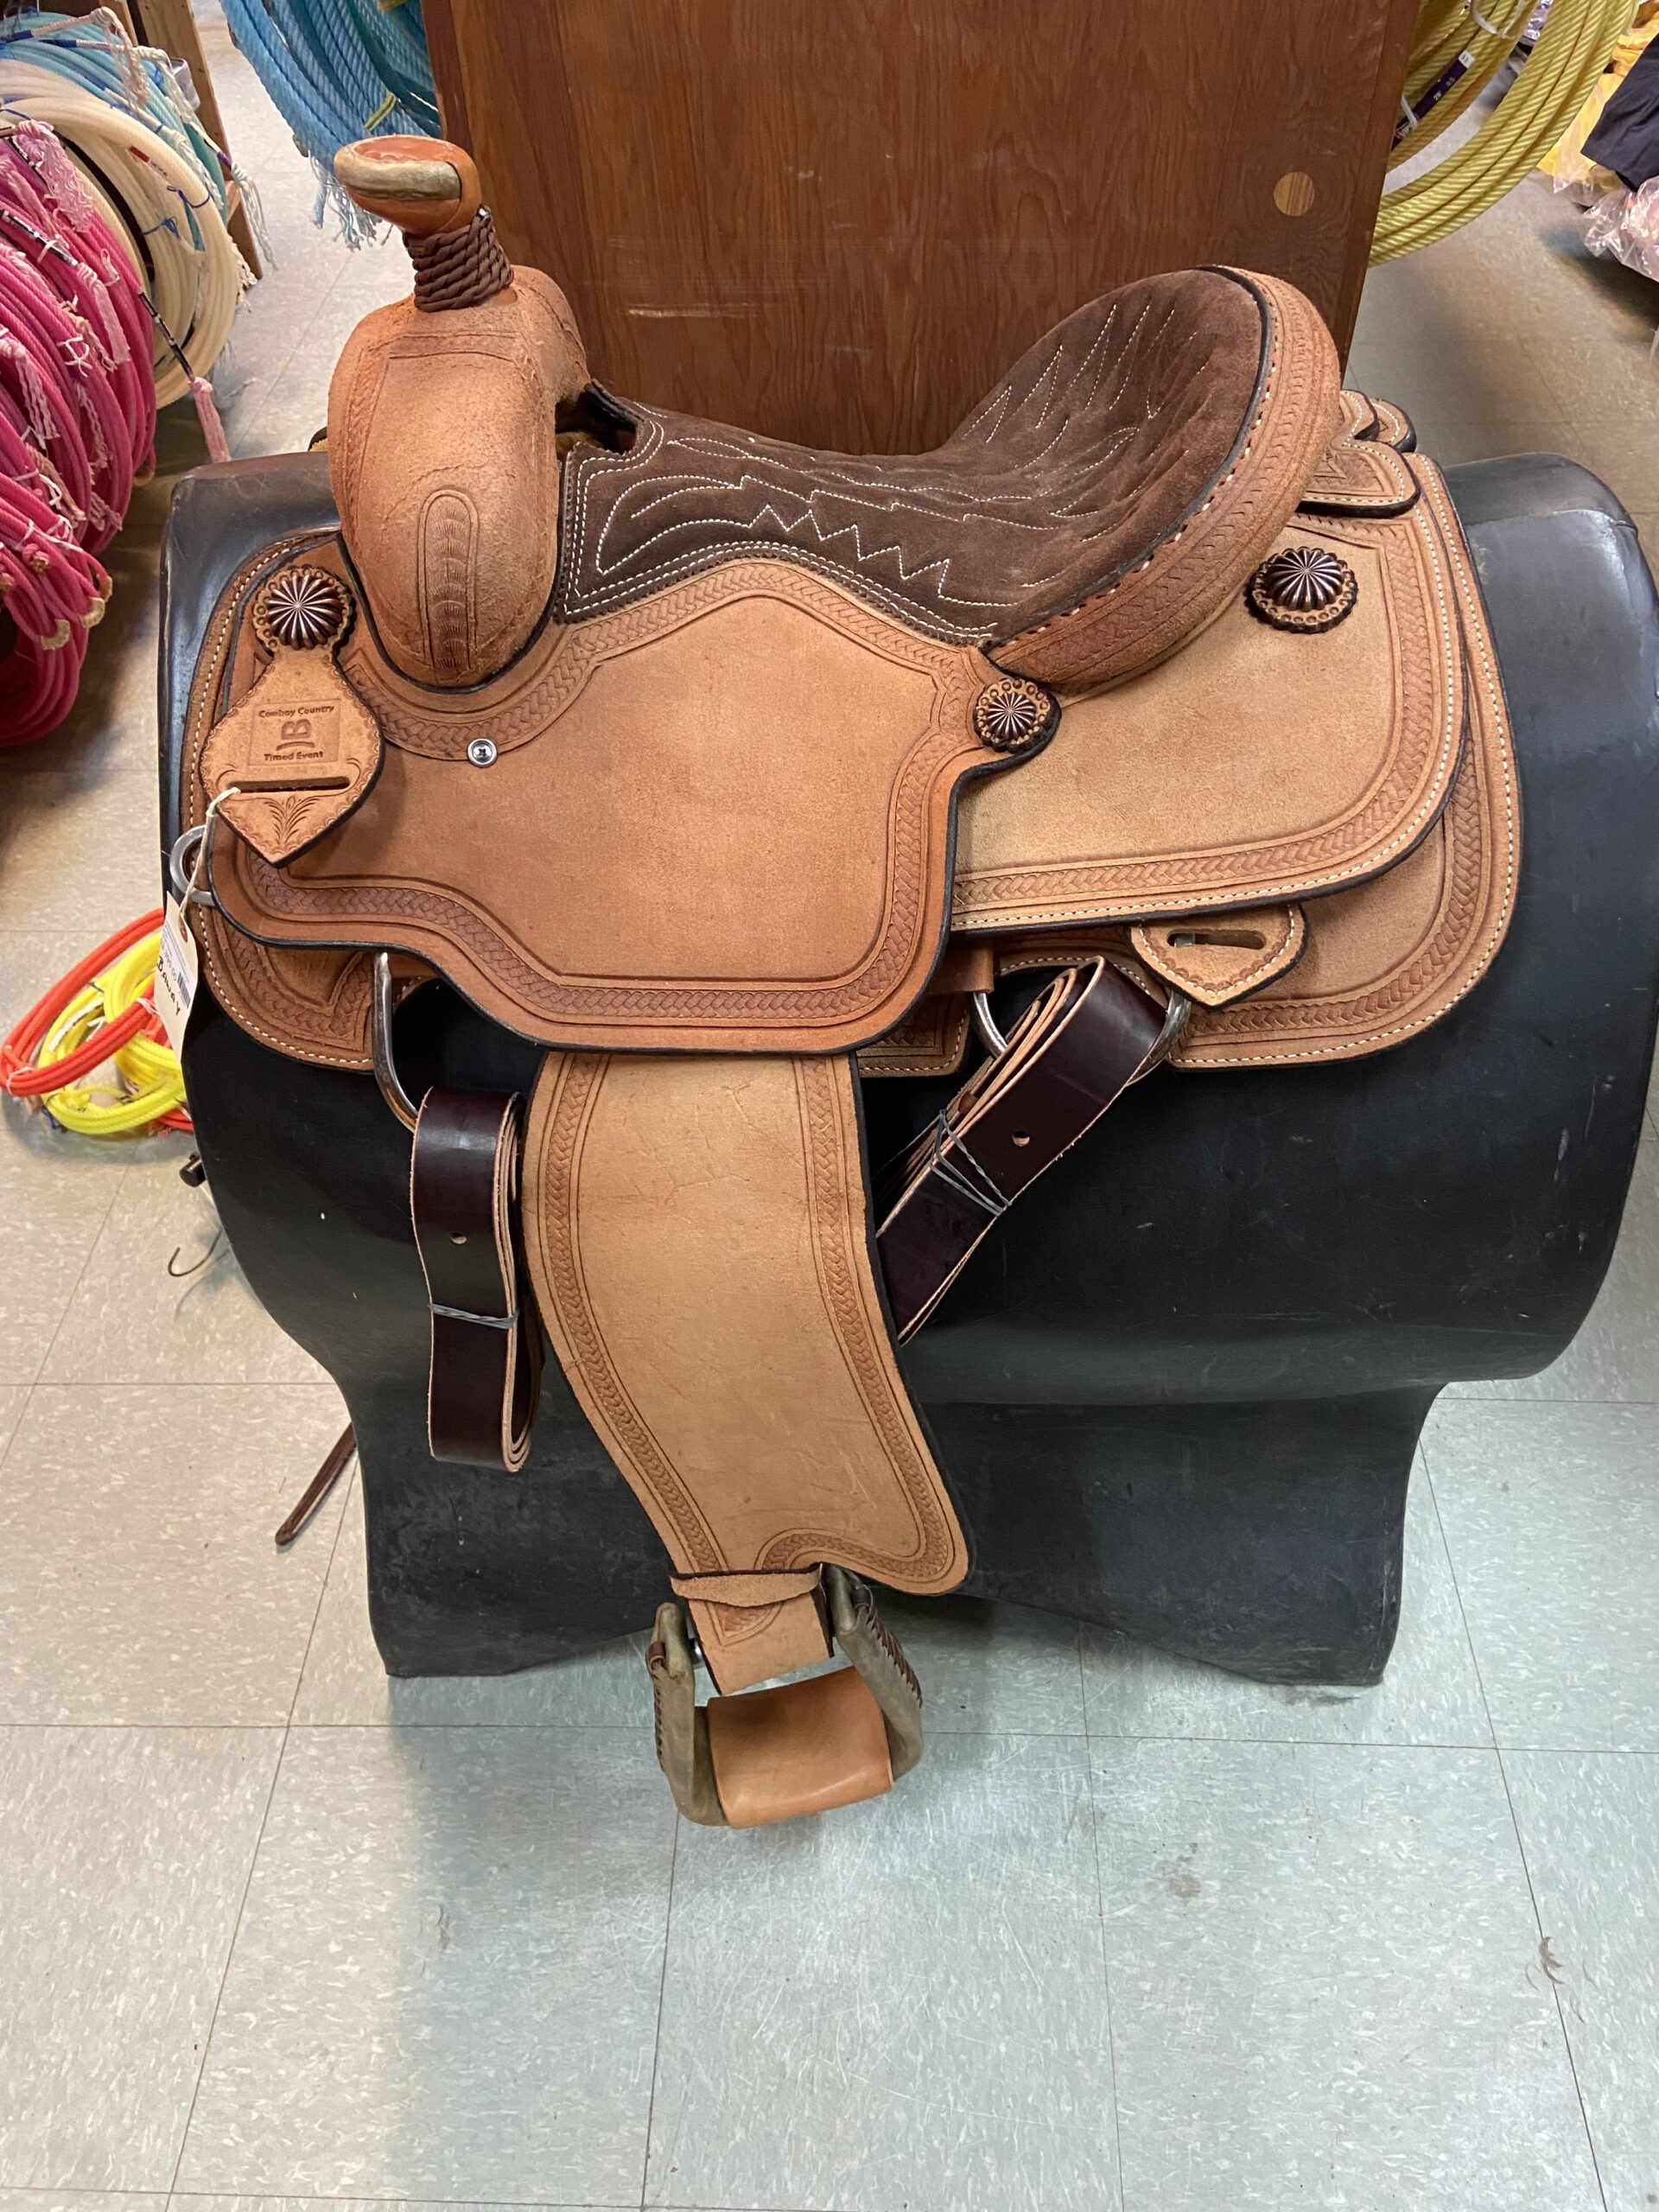 Breakaway roping saddle